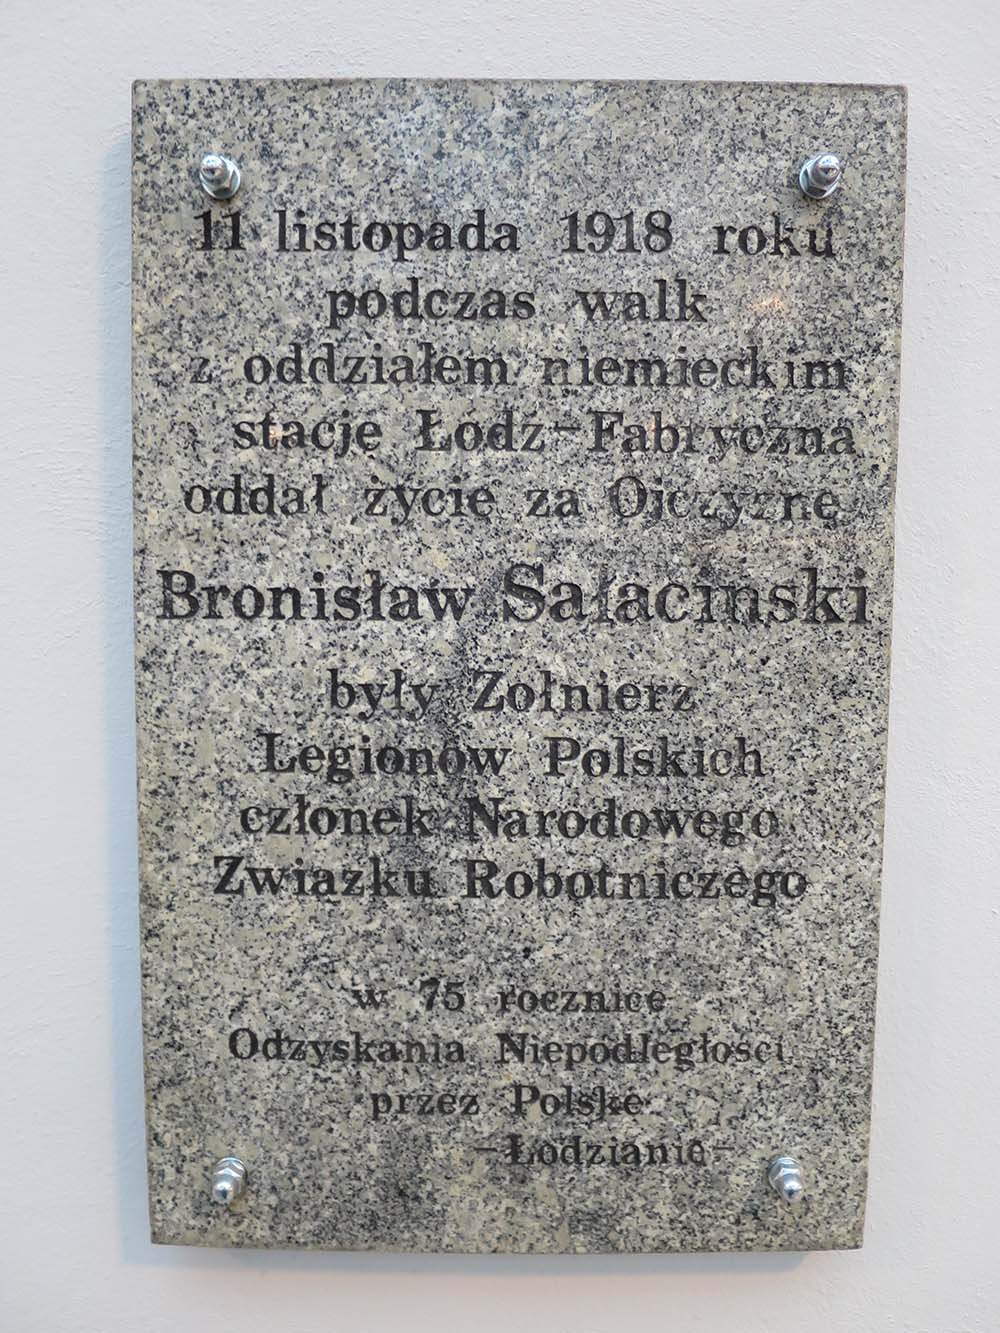 Memorial Bronislaw Salacinski